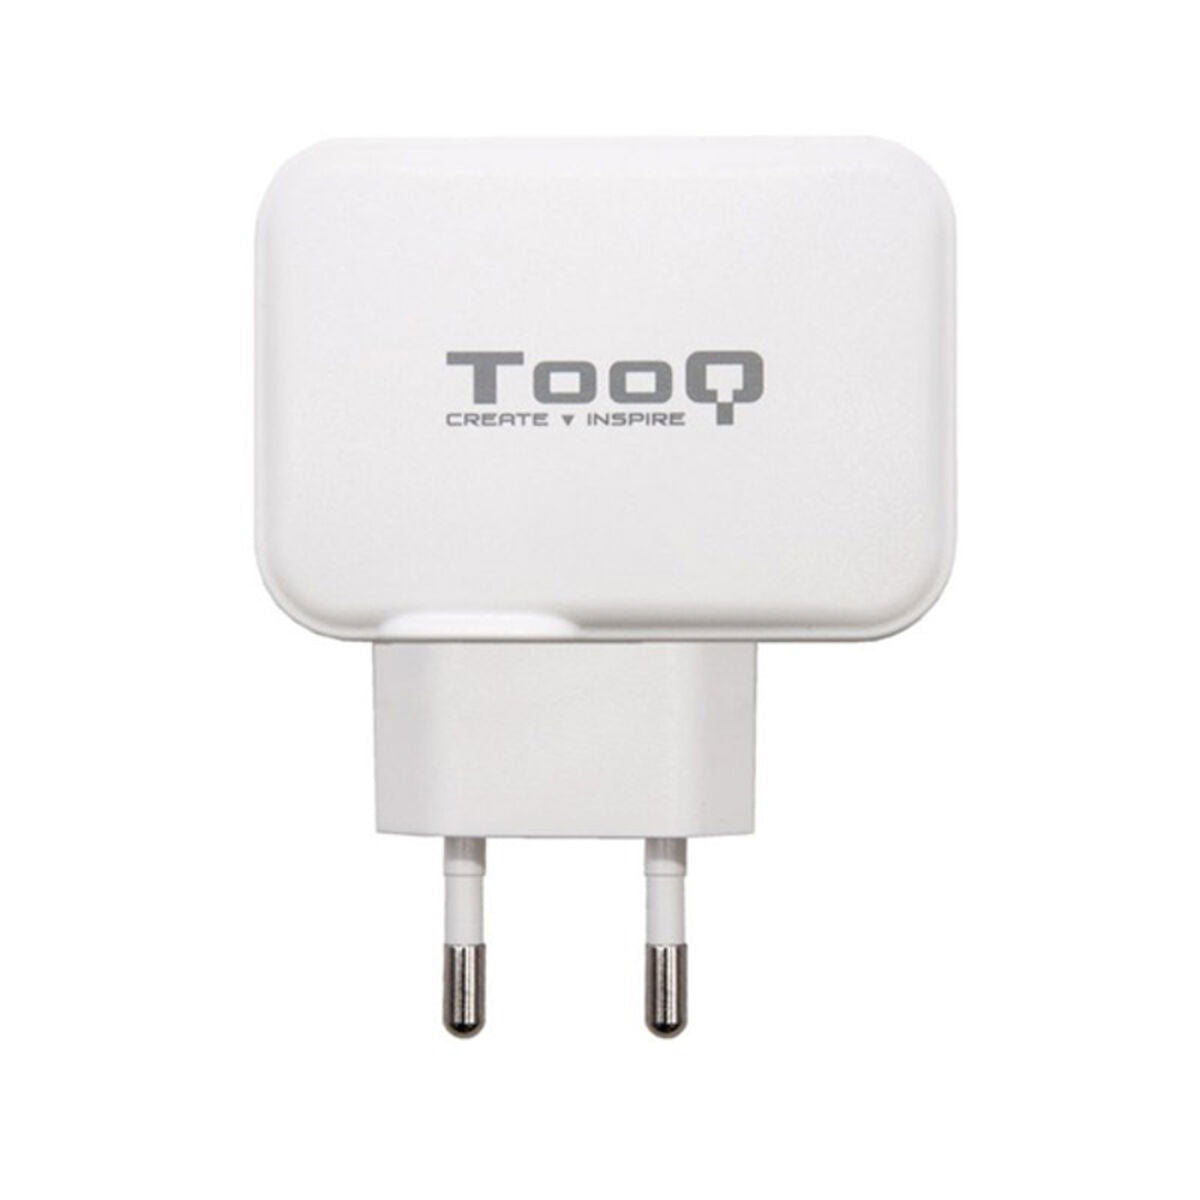 Cargador USB Pared TooQ TQWC-2SC02WT Blanco 27 W